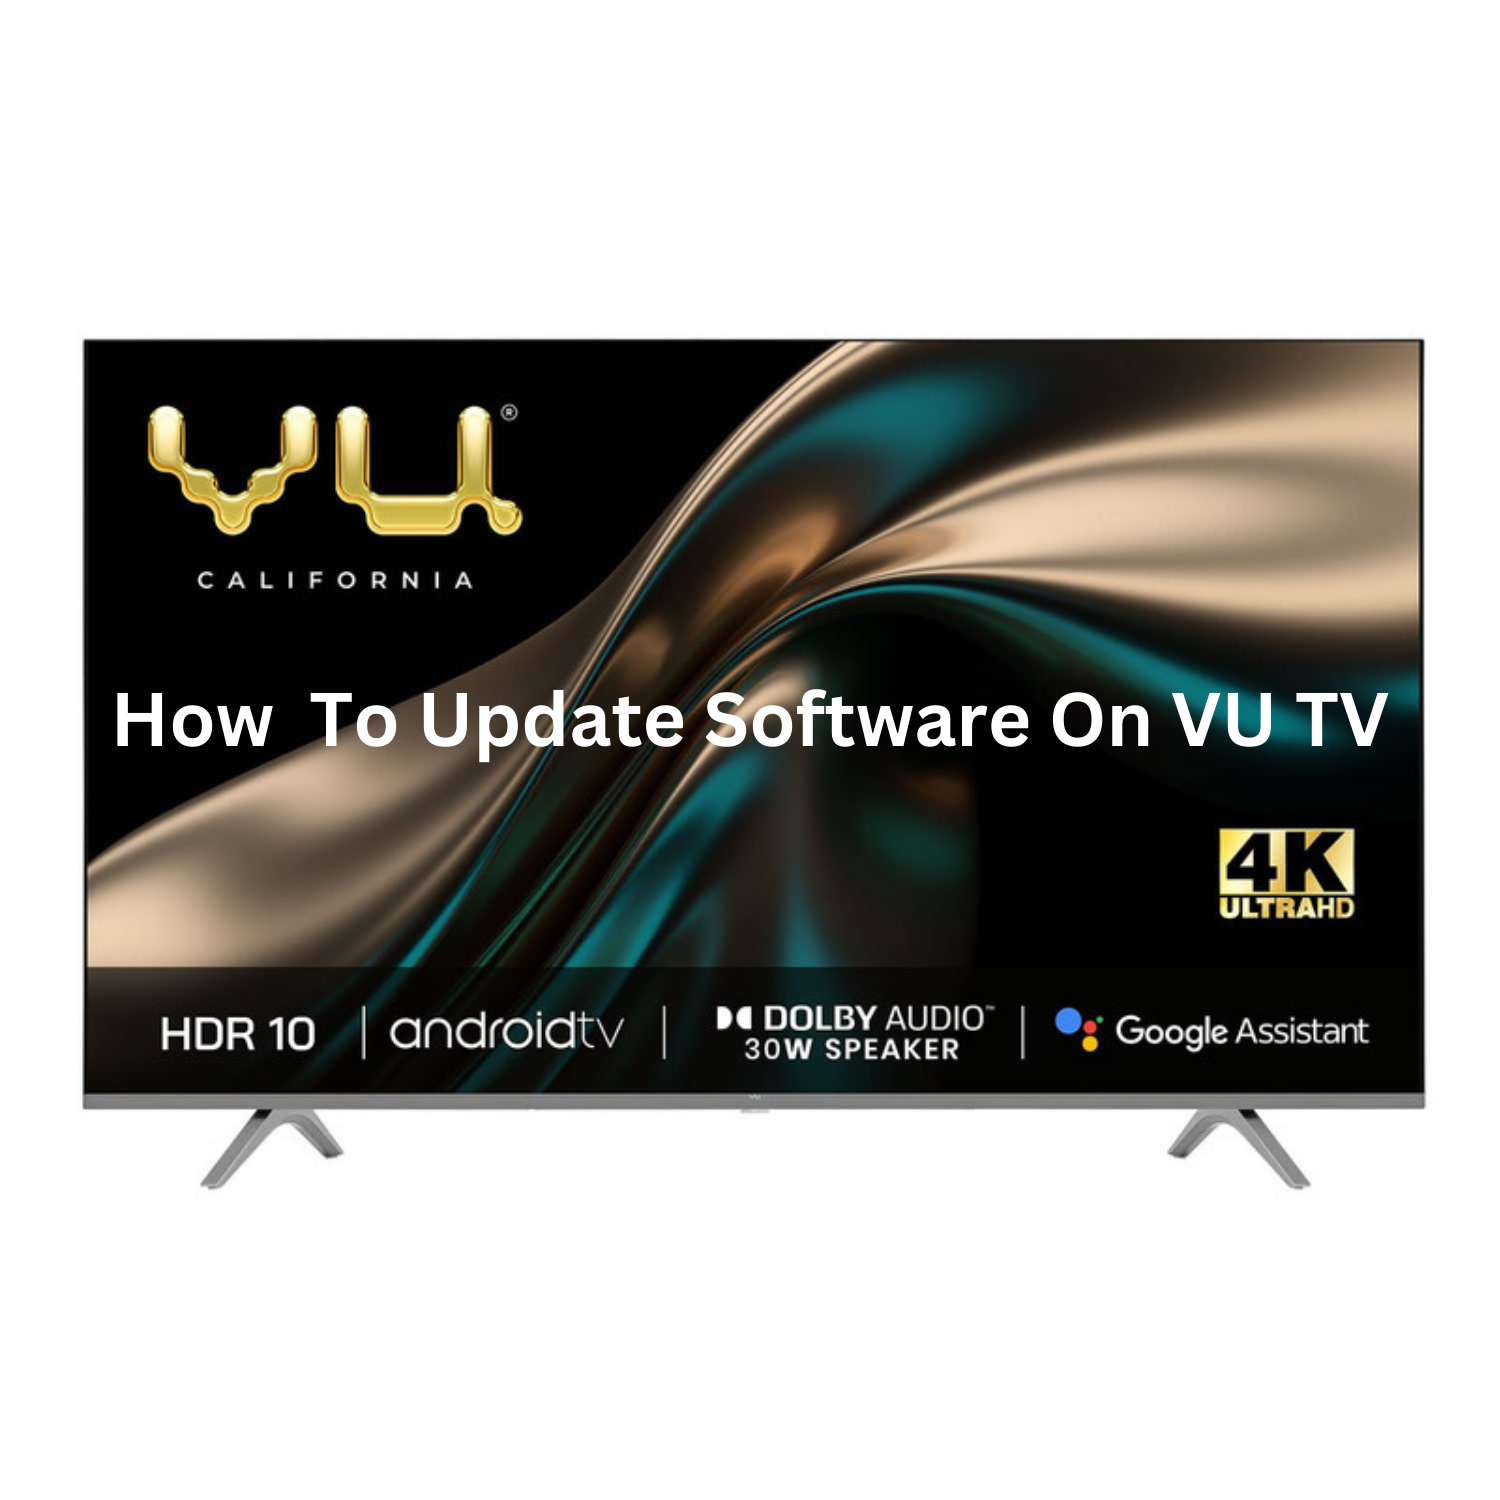 How to update software on VU tv